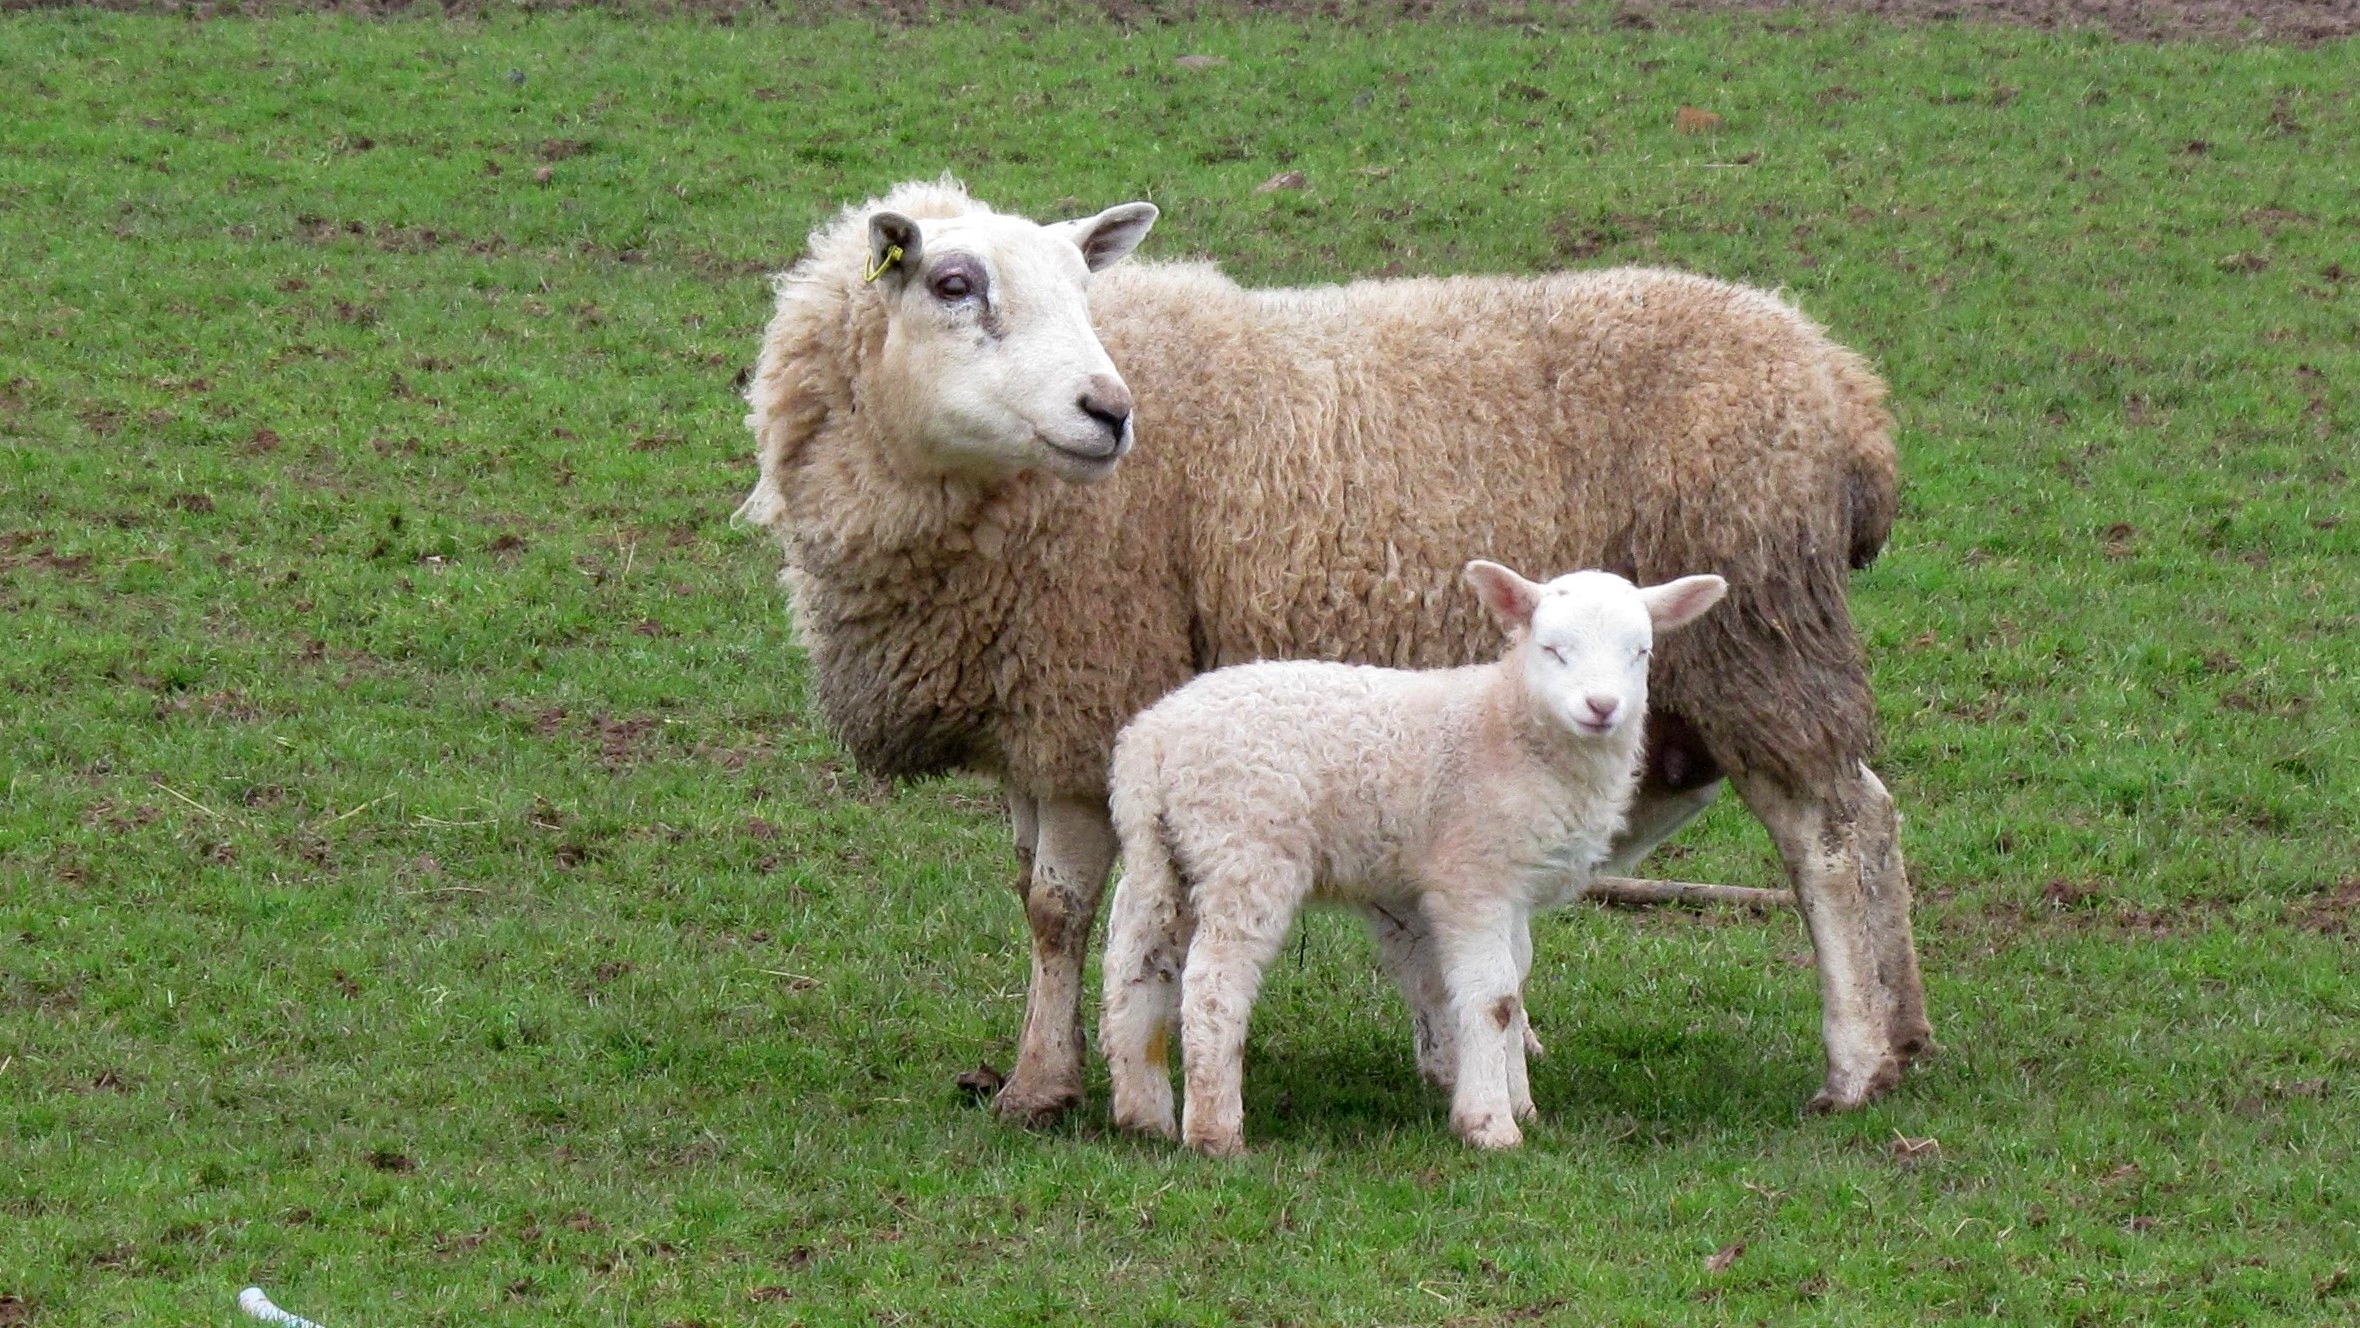 Mama Sheep